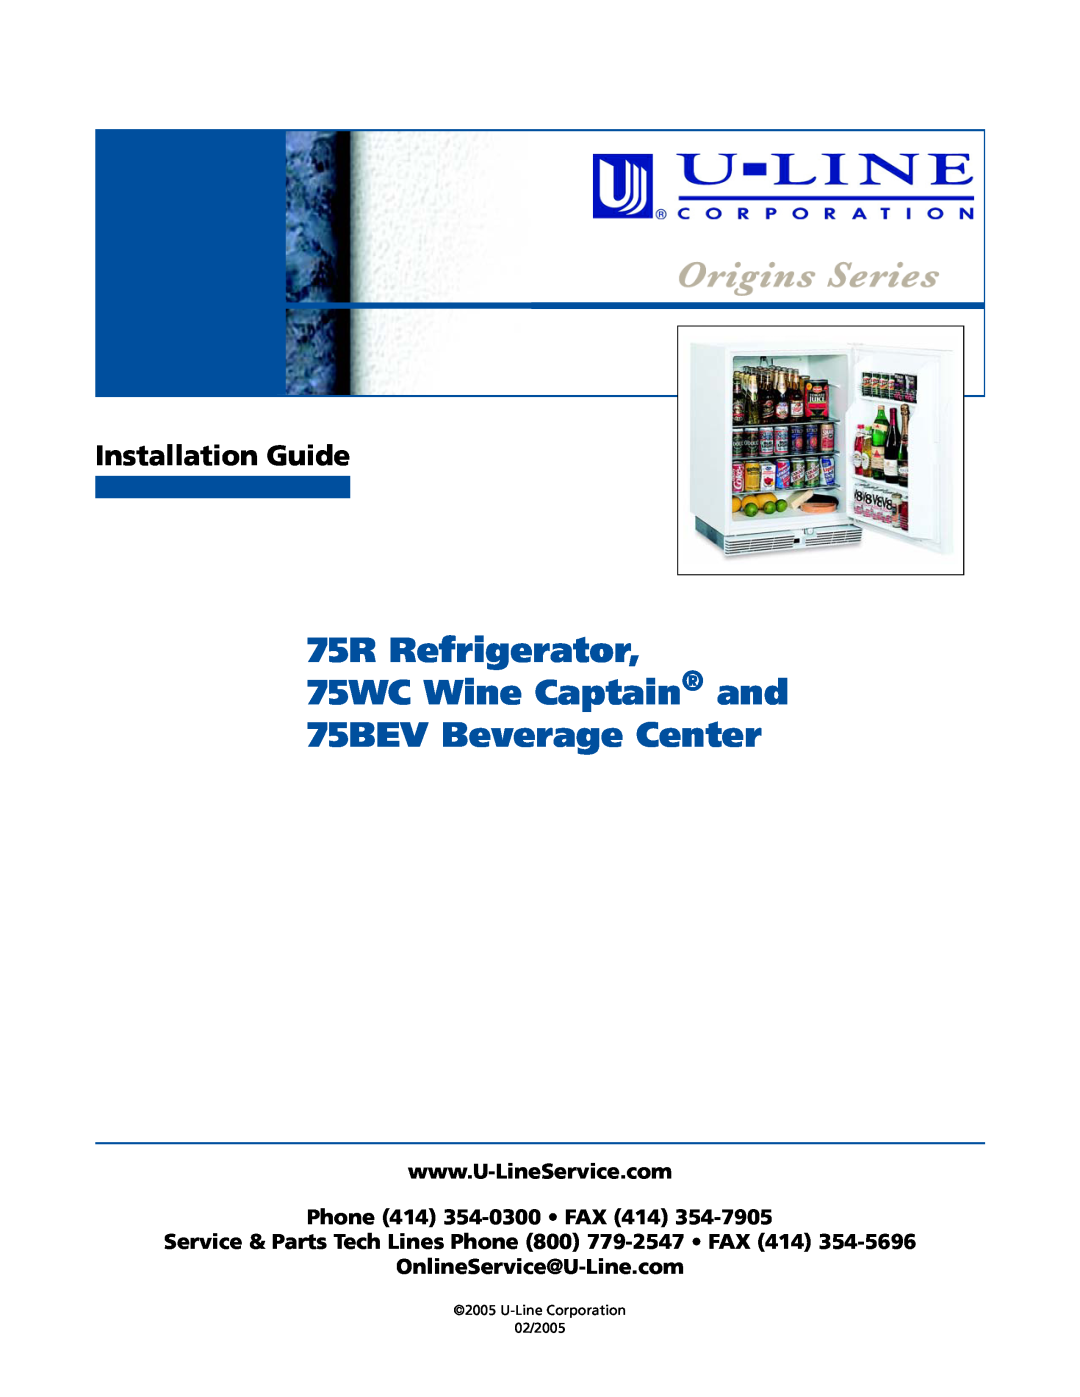 U-Line manual 75R Refrigerator 75WC Wine Captain and 75BEV Beverage Center, Installation Guide, Phone 414 354-0300 FAX 